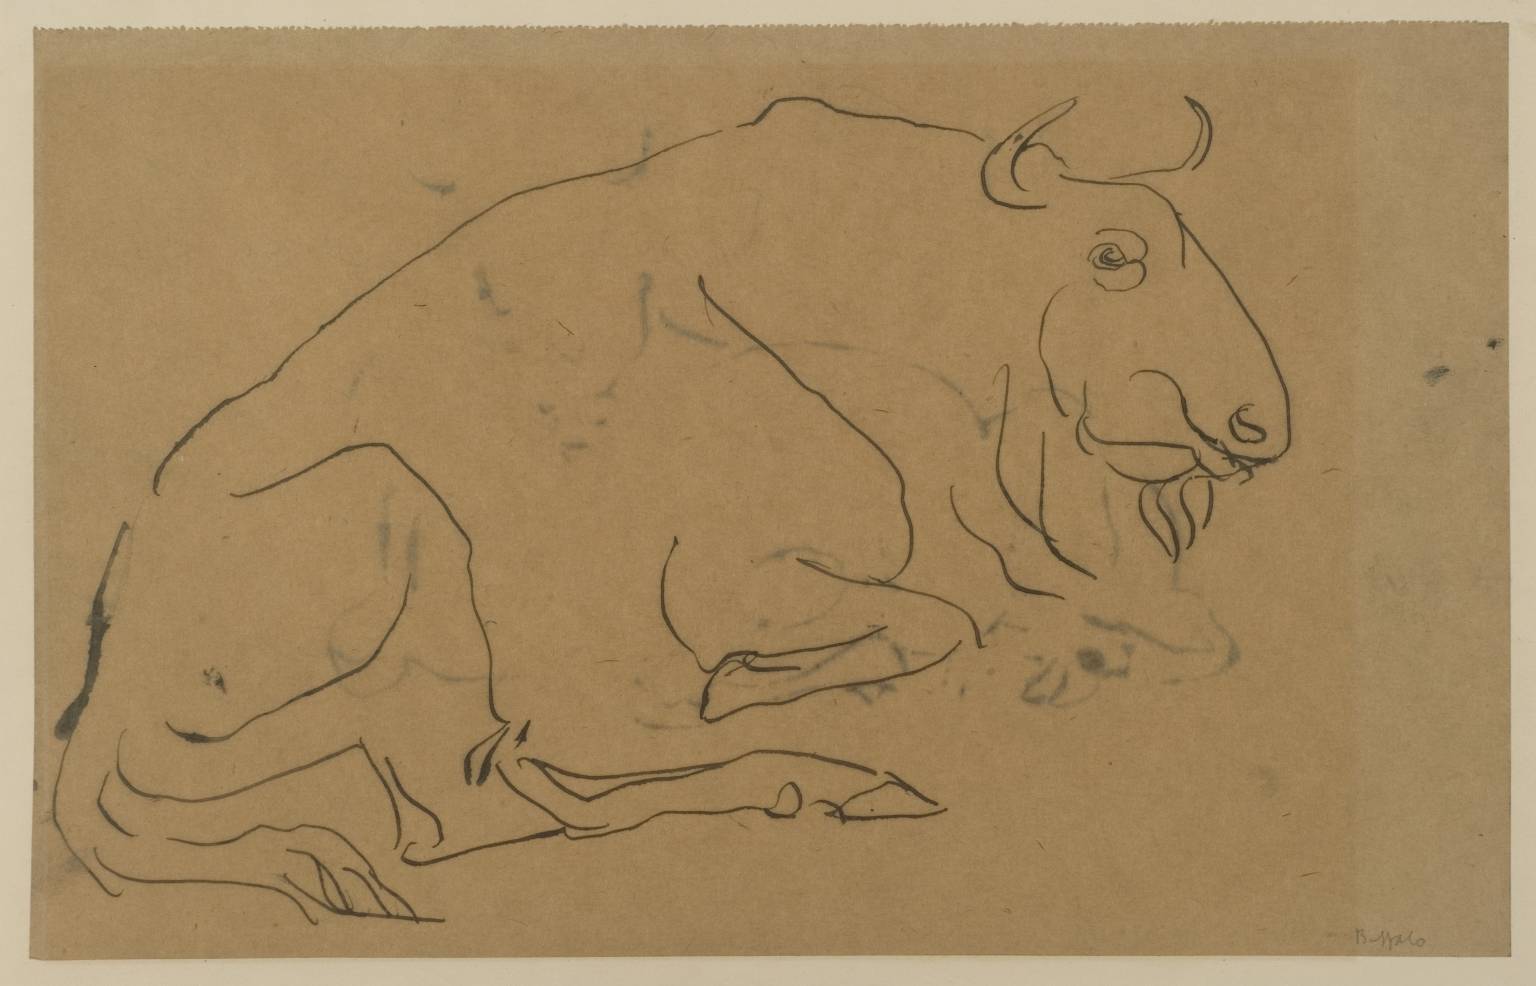 Verso: Traces of Sketch of Bison (circa 1912-13)